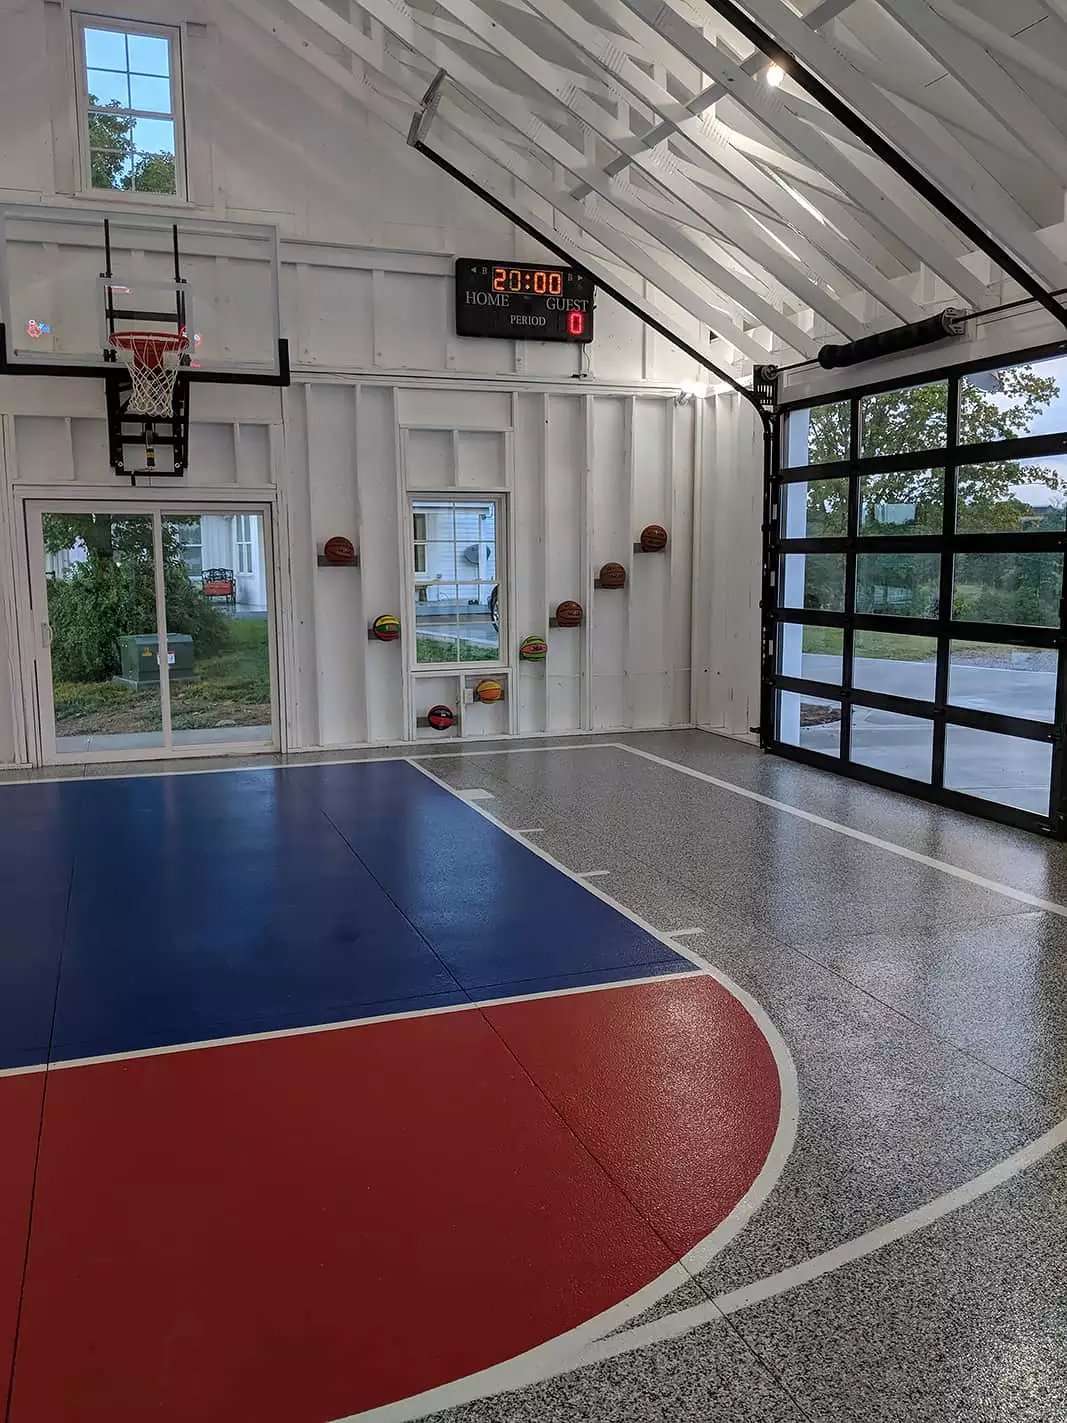 xbasketball-court-garage-floor-garage-living.jpg.pagespeed.ic.YwXg4P1IMh (1)